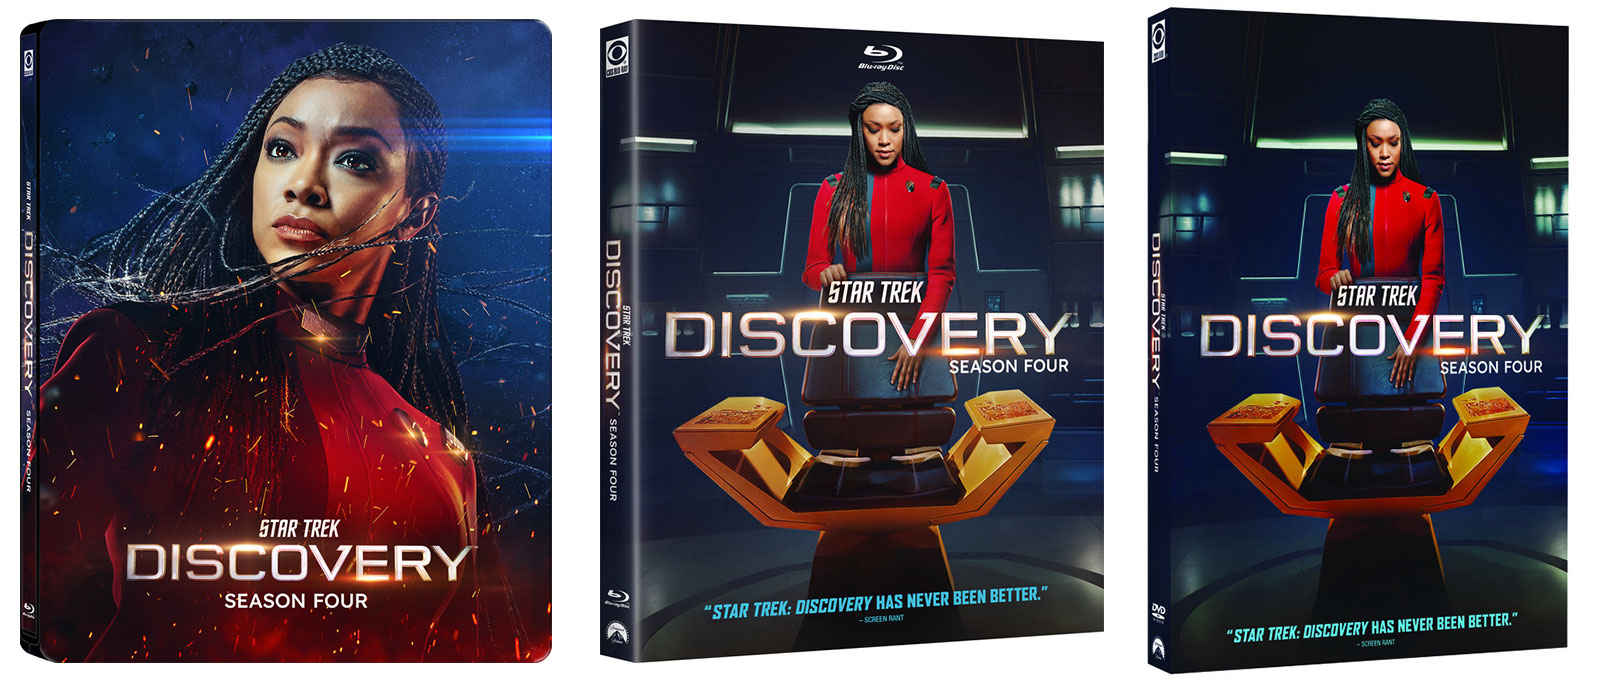 Star Trek: Discovery Season 4 limited-edition Blu-ray Steelbok, Blu-ray and DVD cover art